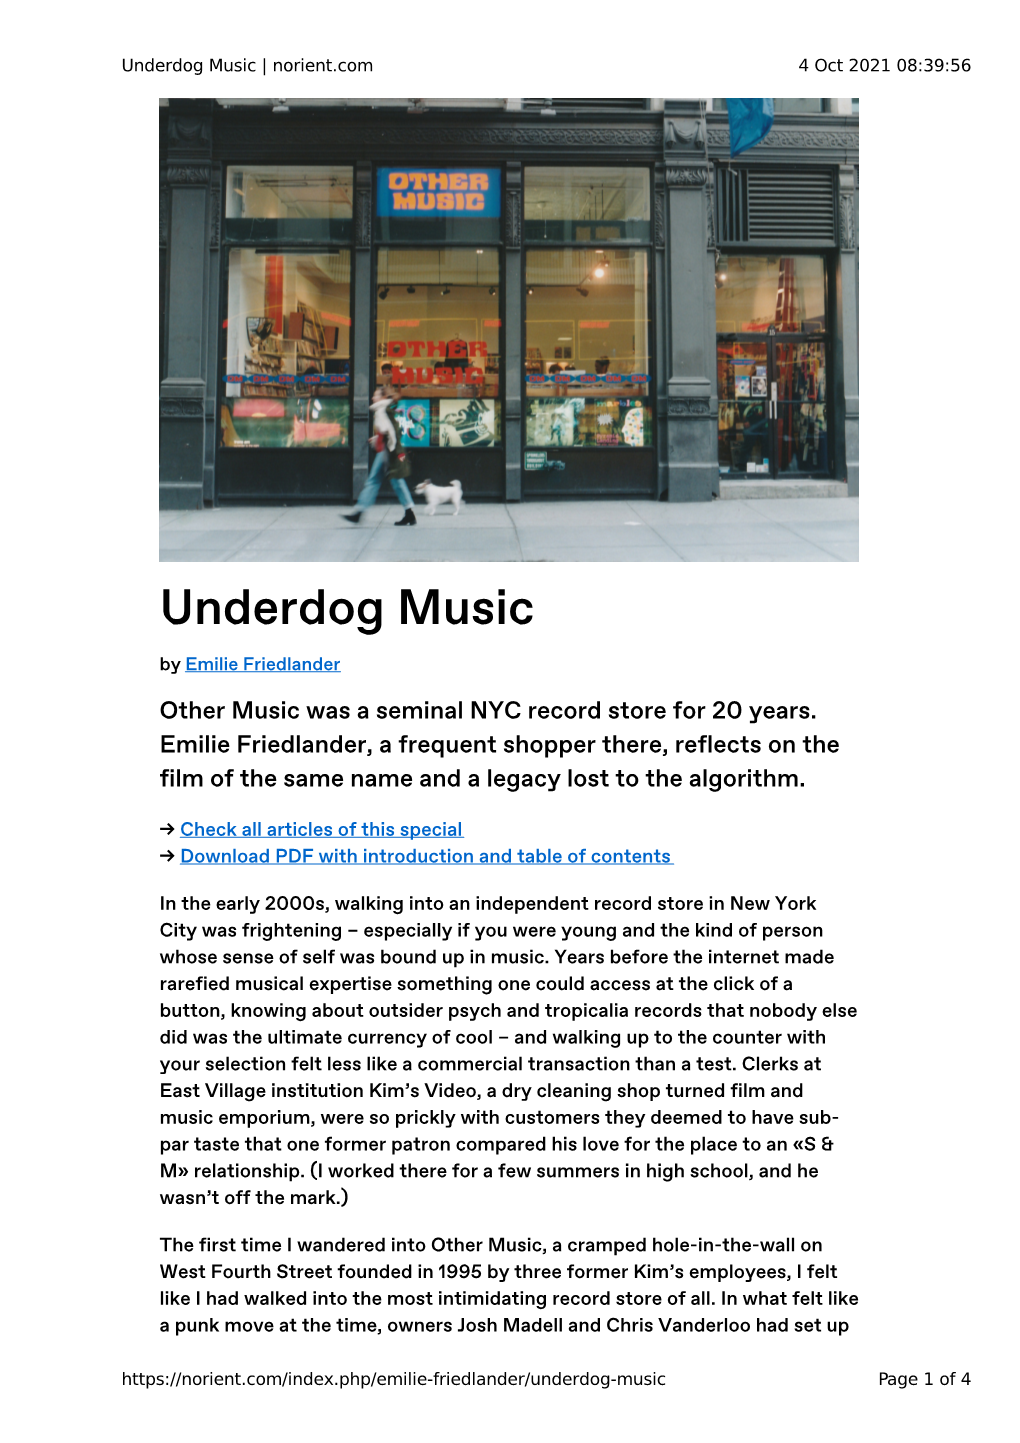 Underdog Music | Norient.Com 4 Oct 2021 08:39:56